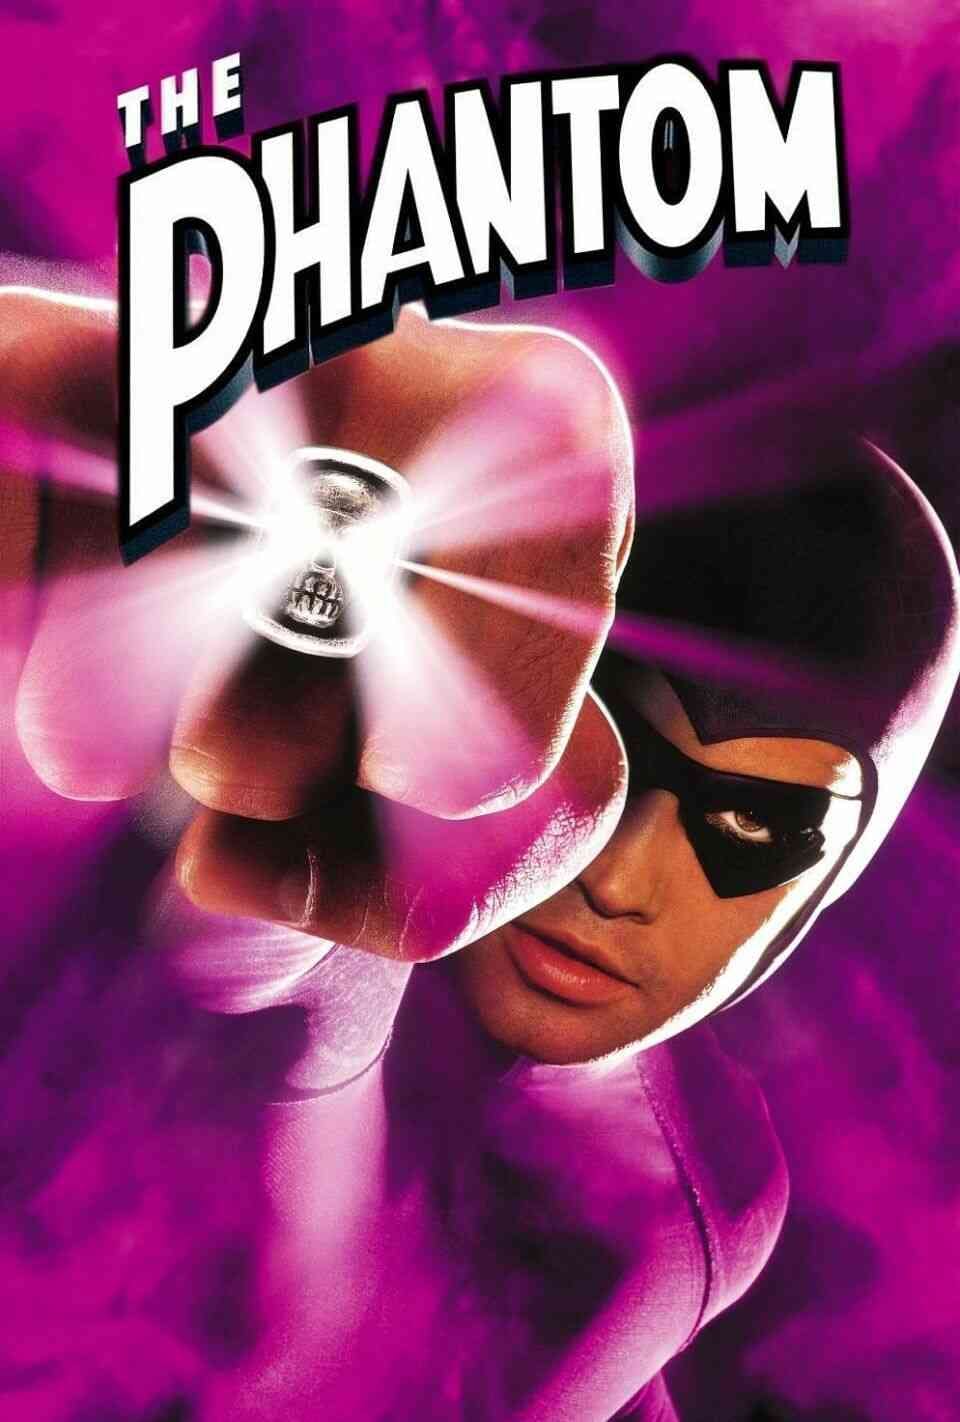 Read The Phantom screenplay (poster)